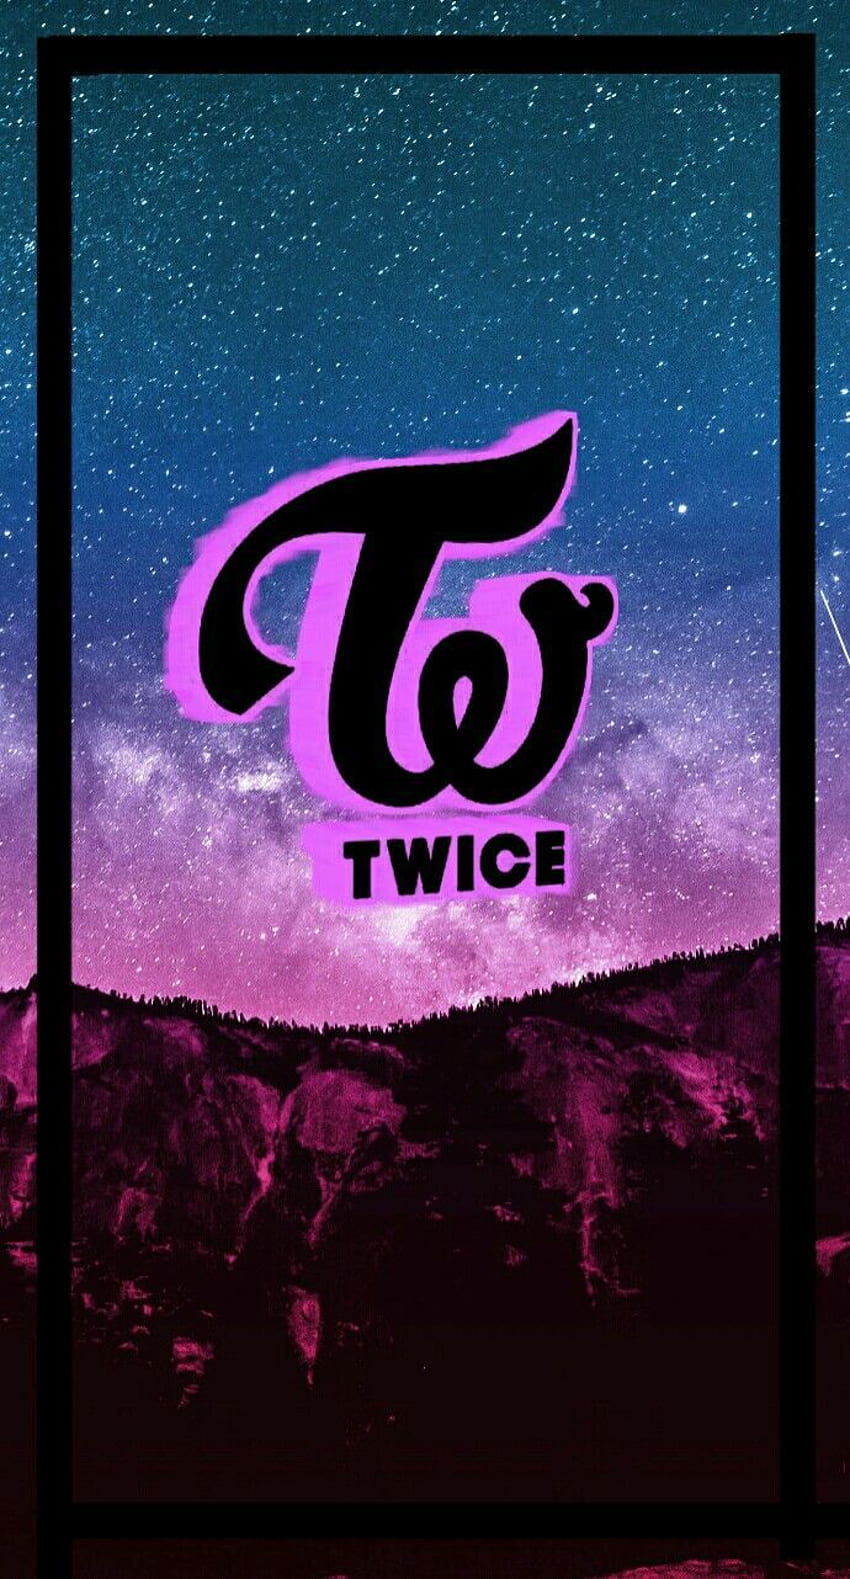 TWICE - Coming Soon (Logo Colour Change Update) : r/kpop